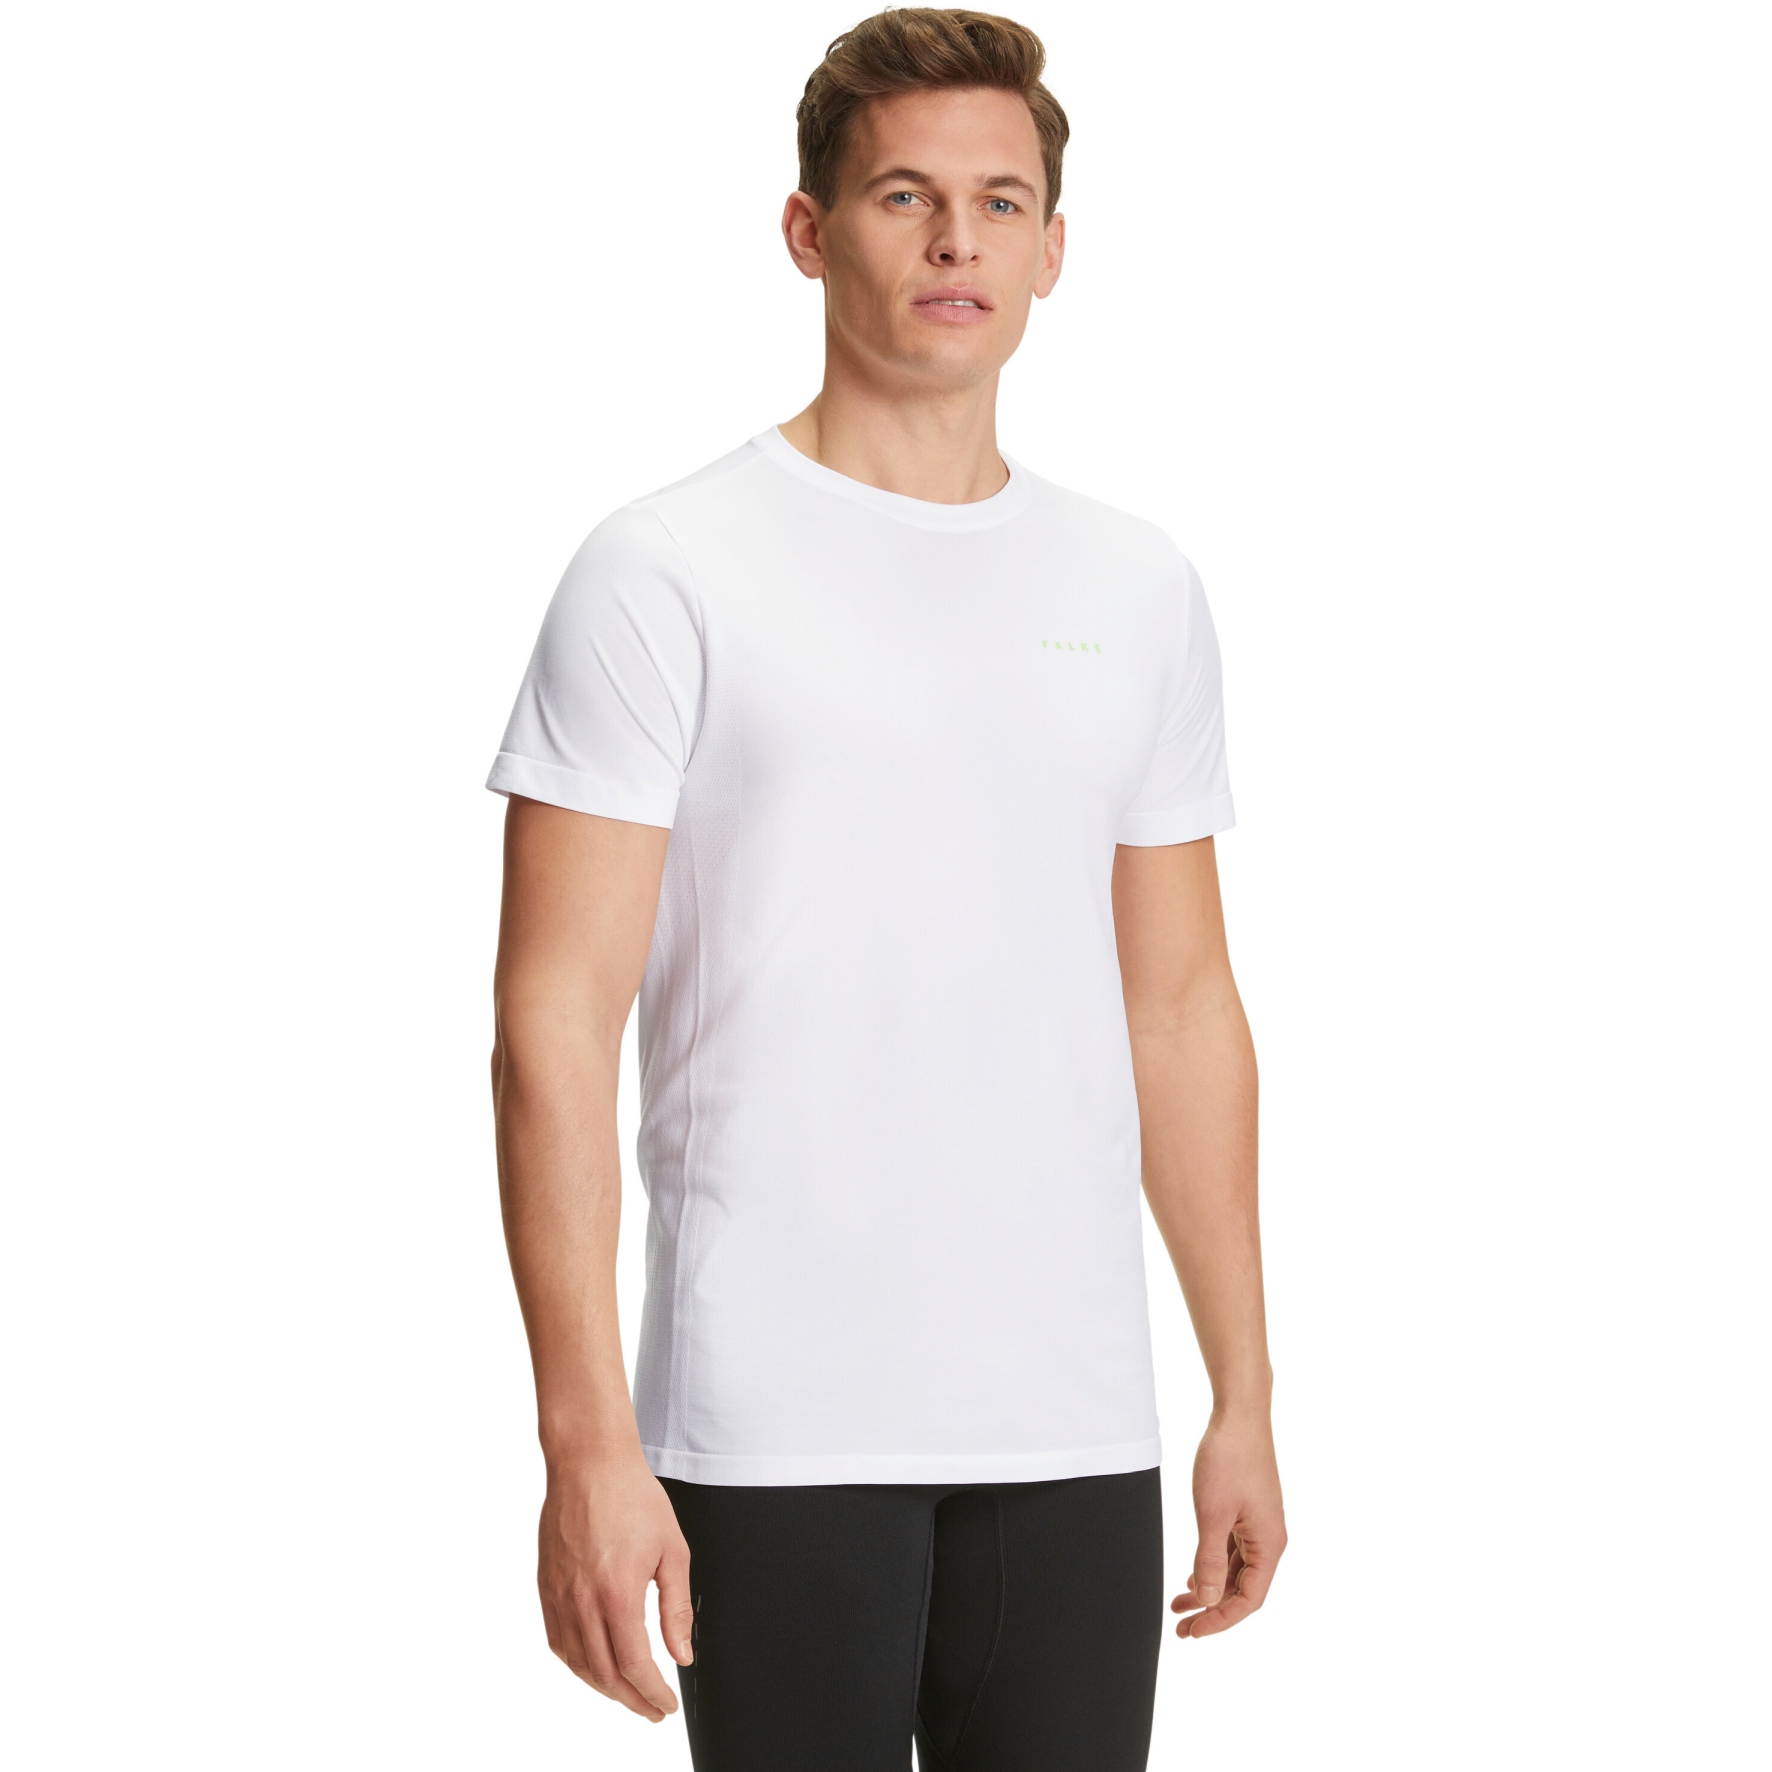 Picture of Falke RU T-Shirt 2 - white 2860